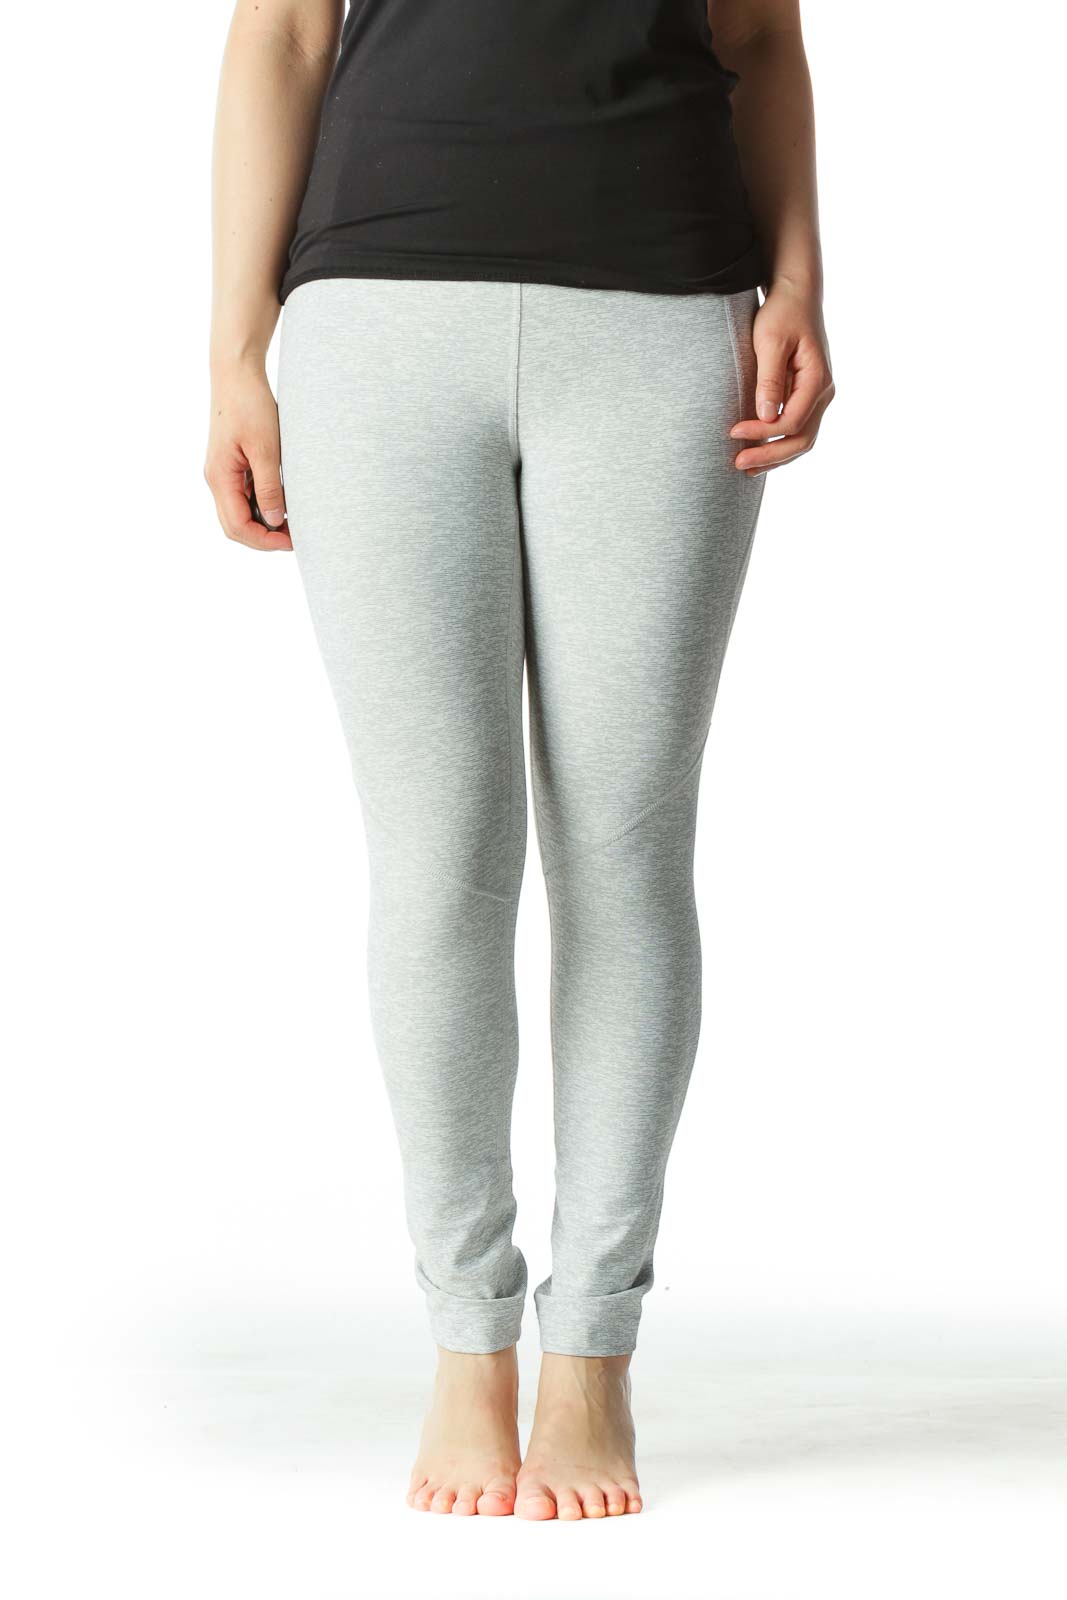 Gray Capri Yoga Pants  Front